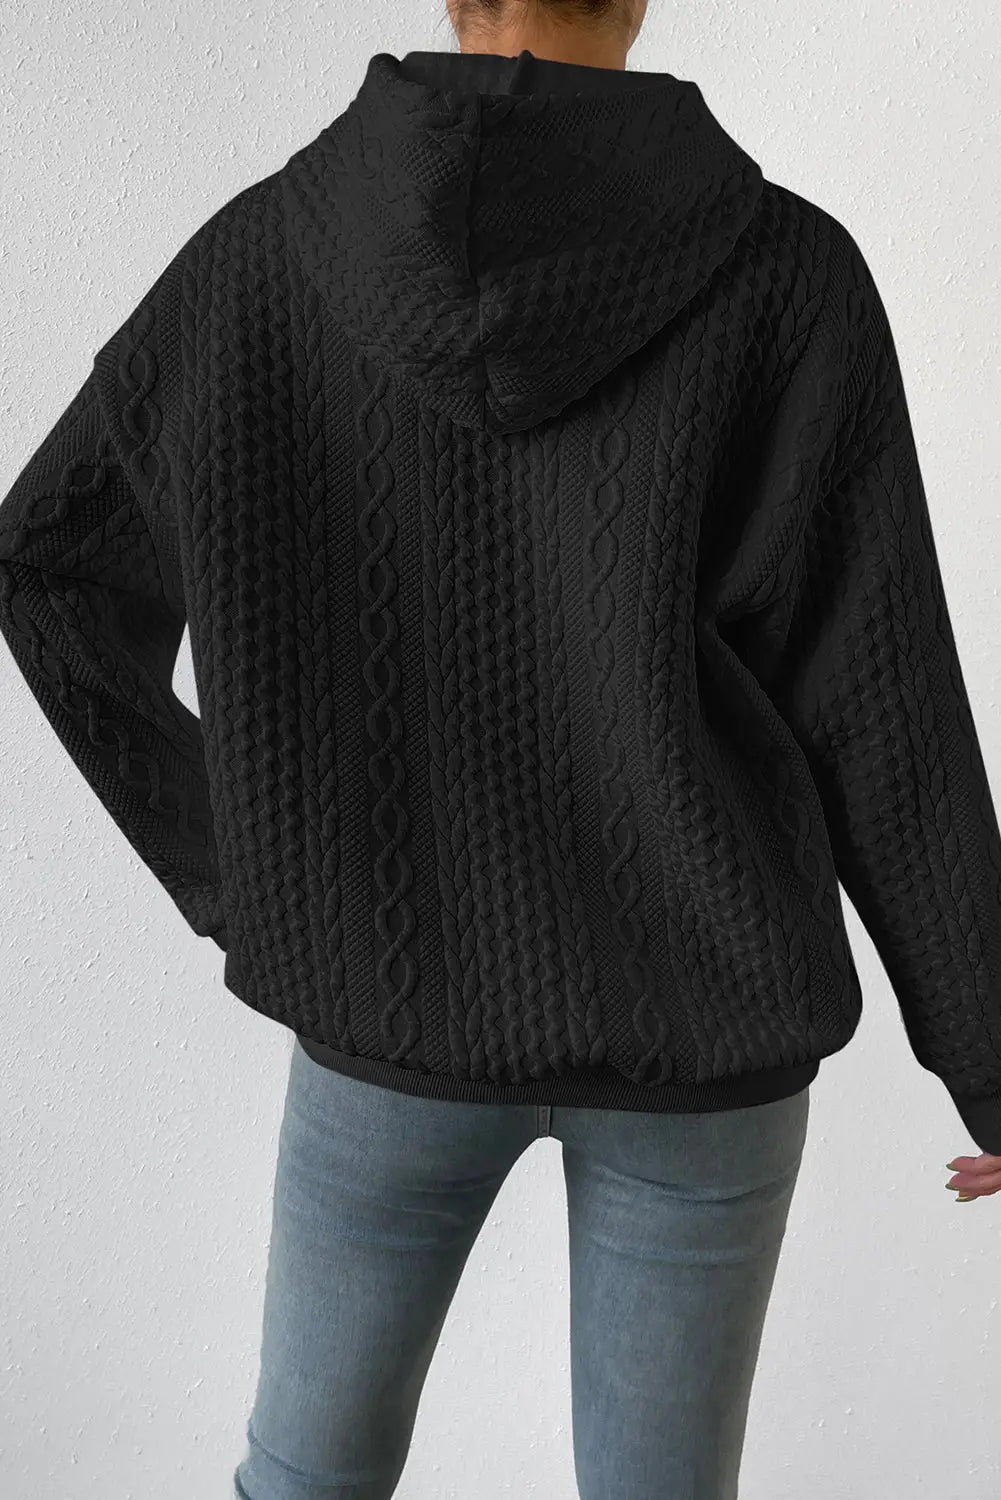 Black cable textured casual drawstring hoodie - sweatshits & hoodies